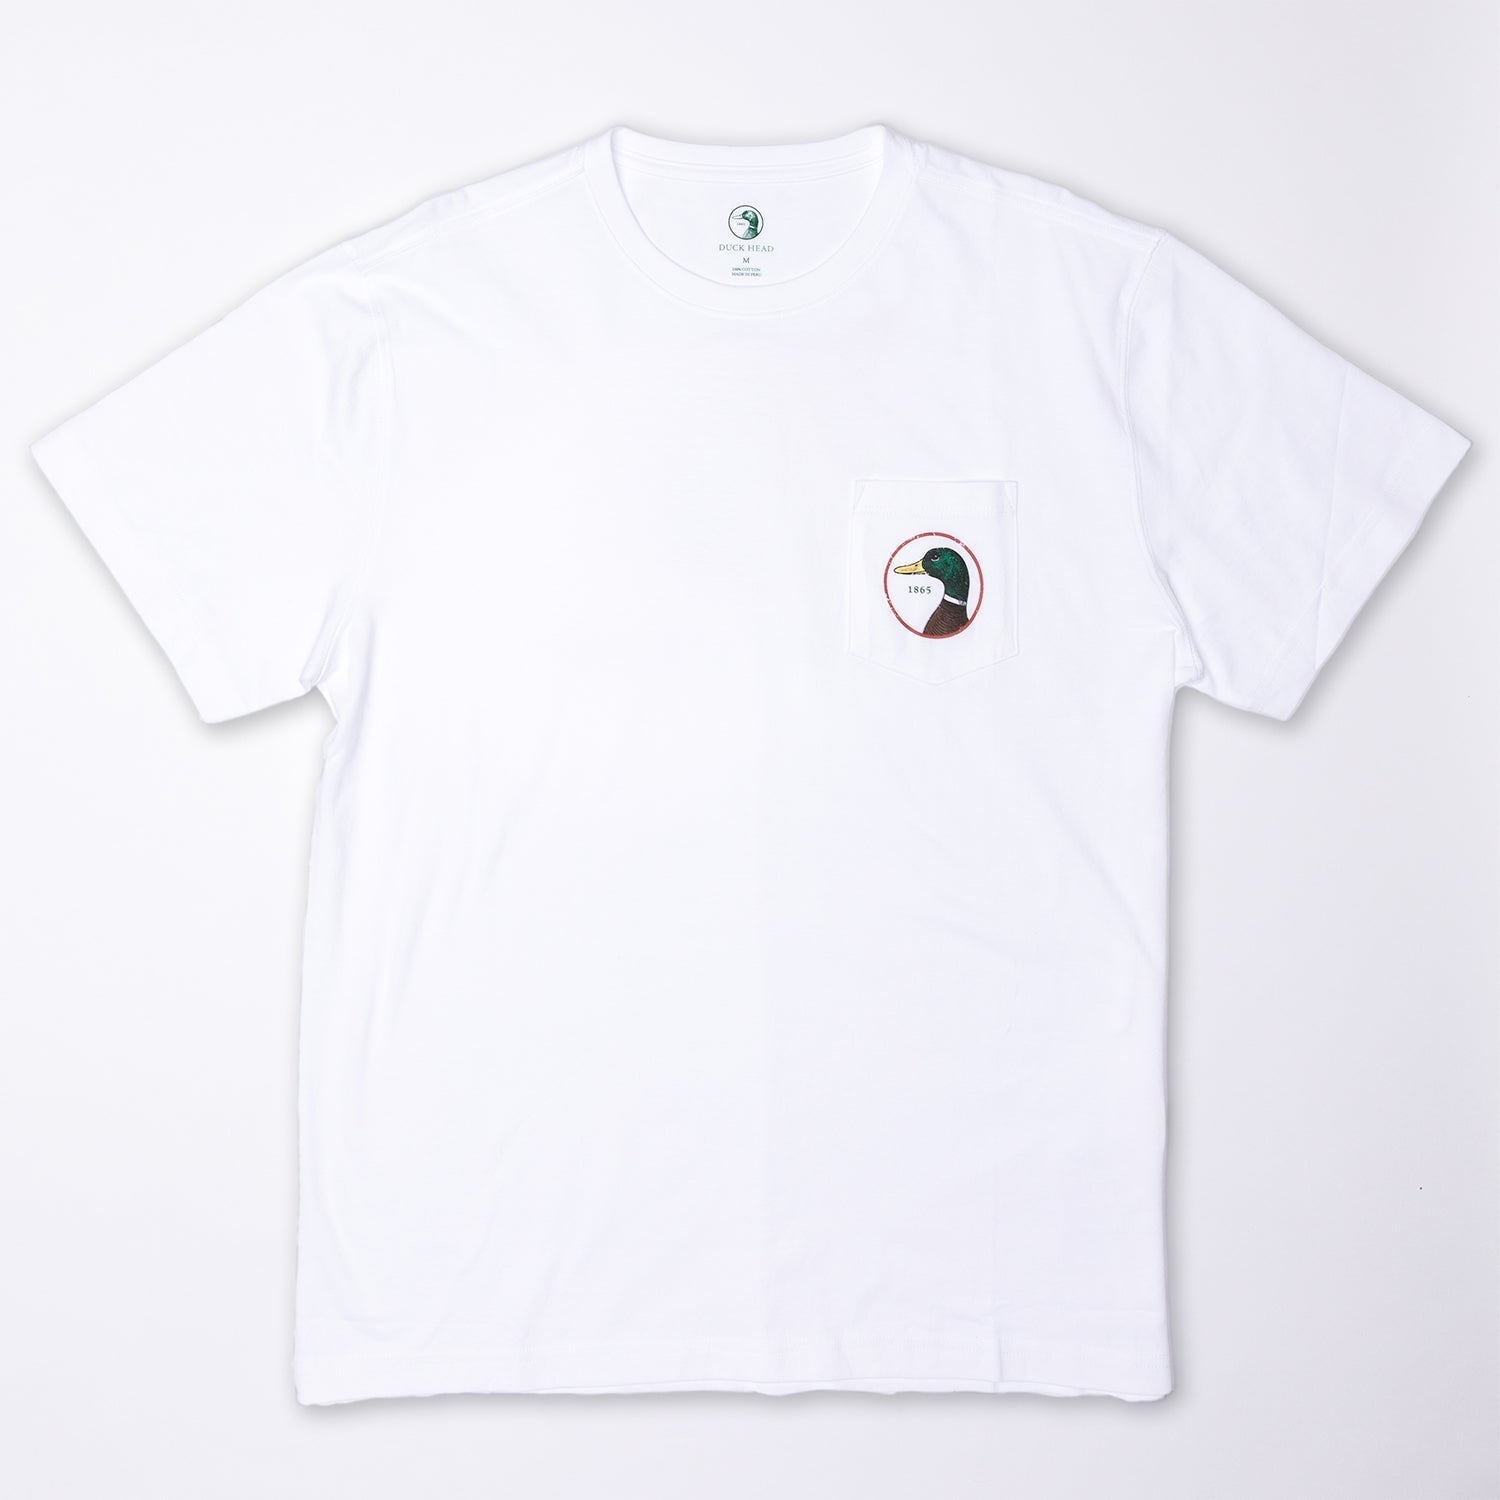 DUCK HEAD Men's Tees Duck Head Logo Short Sleeve T-Shirt || David's Clothing